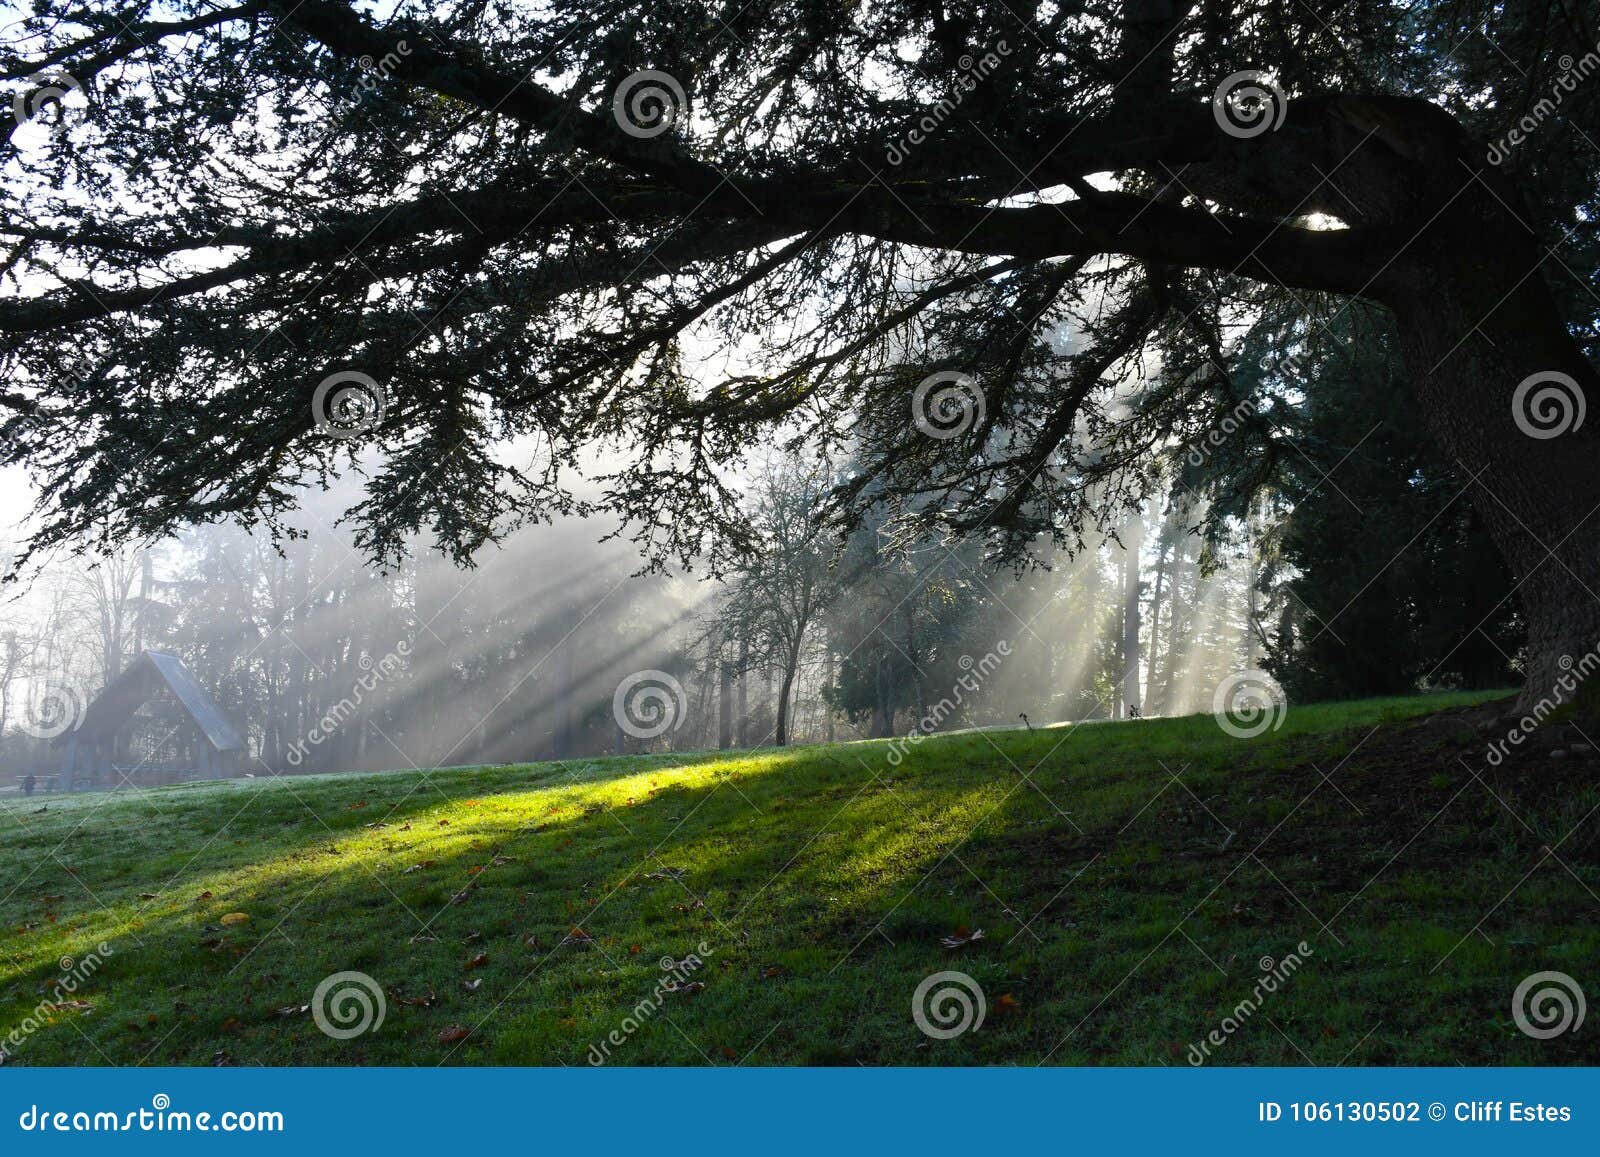 sun rays shining through trees in redmond, wa park